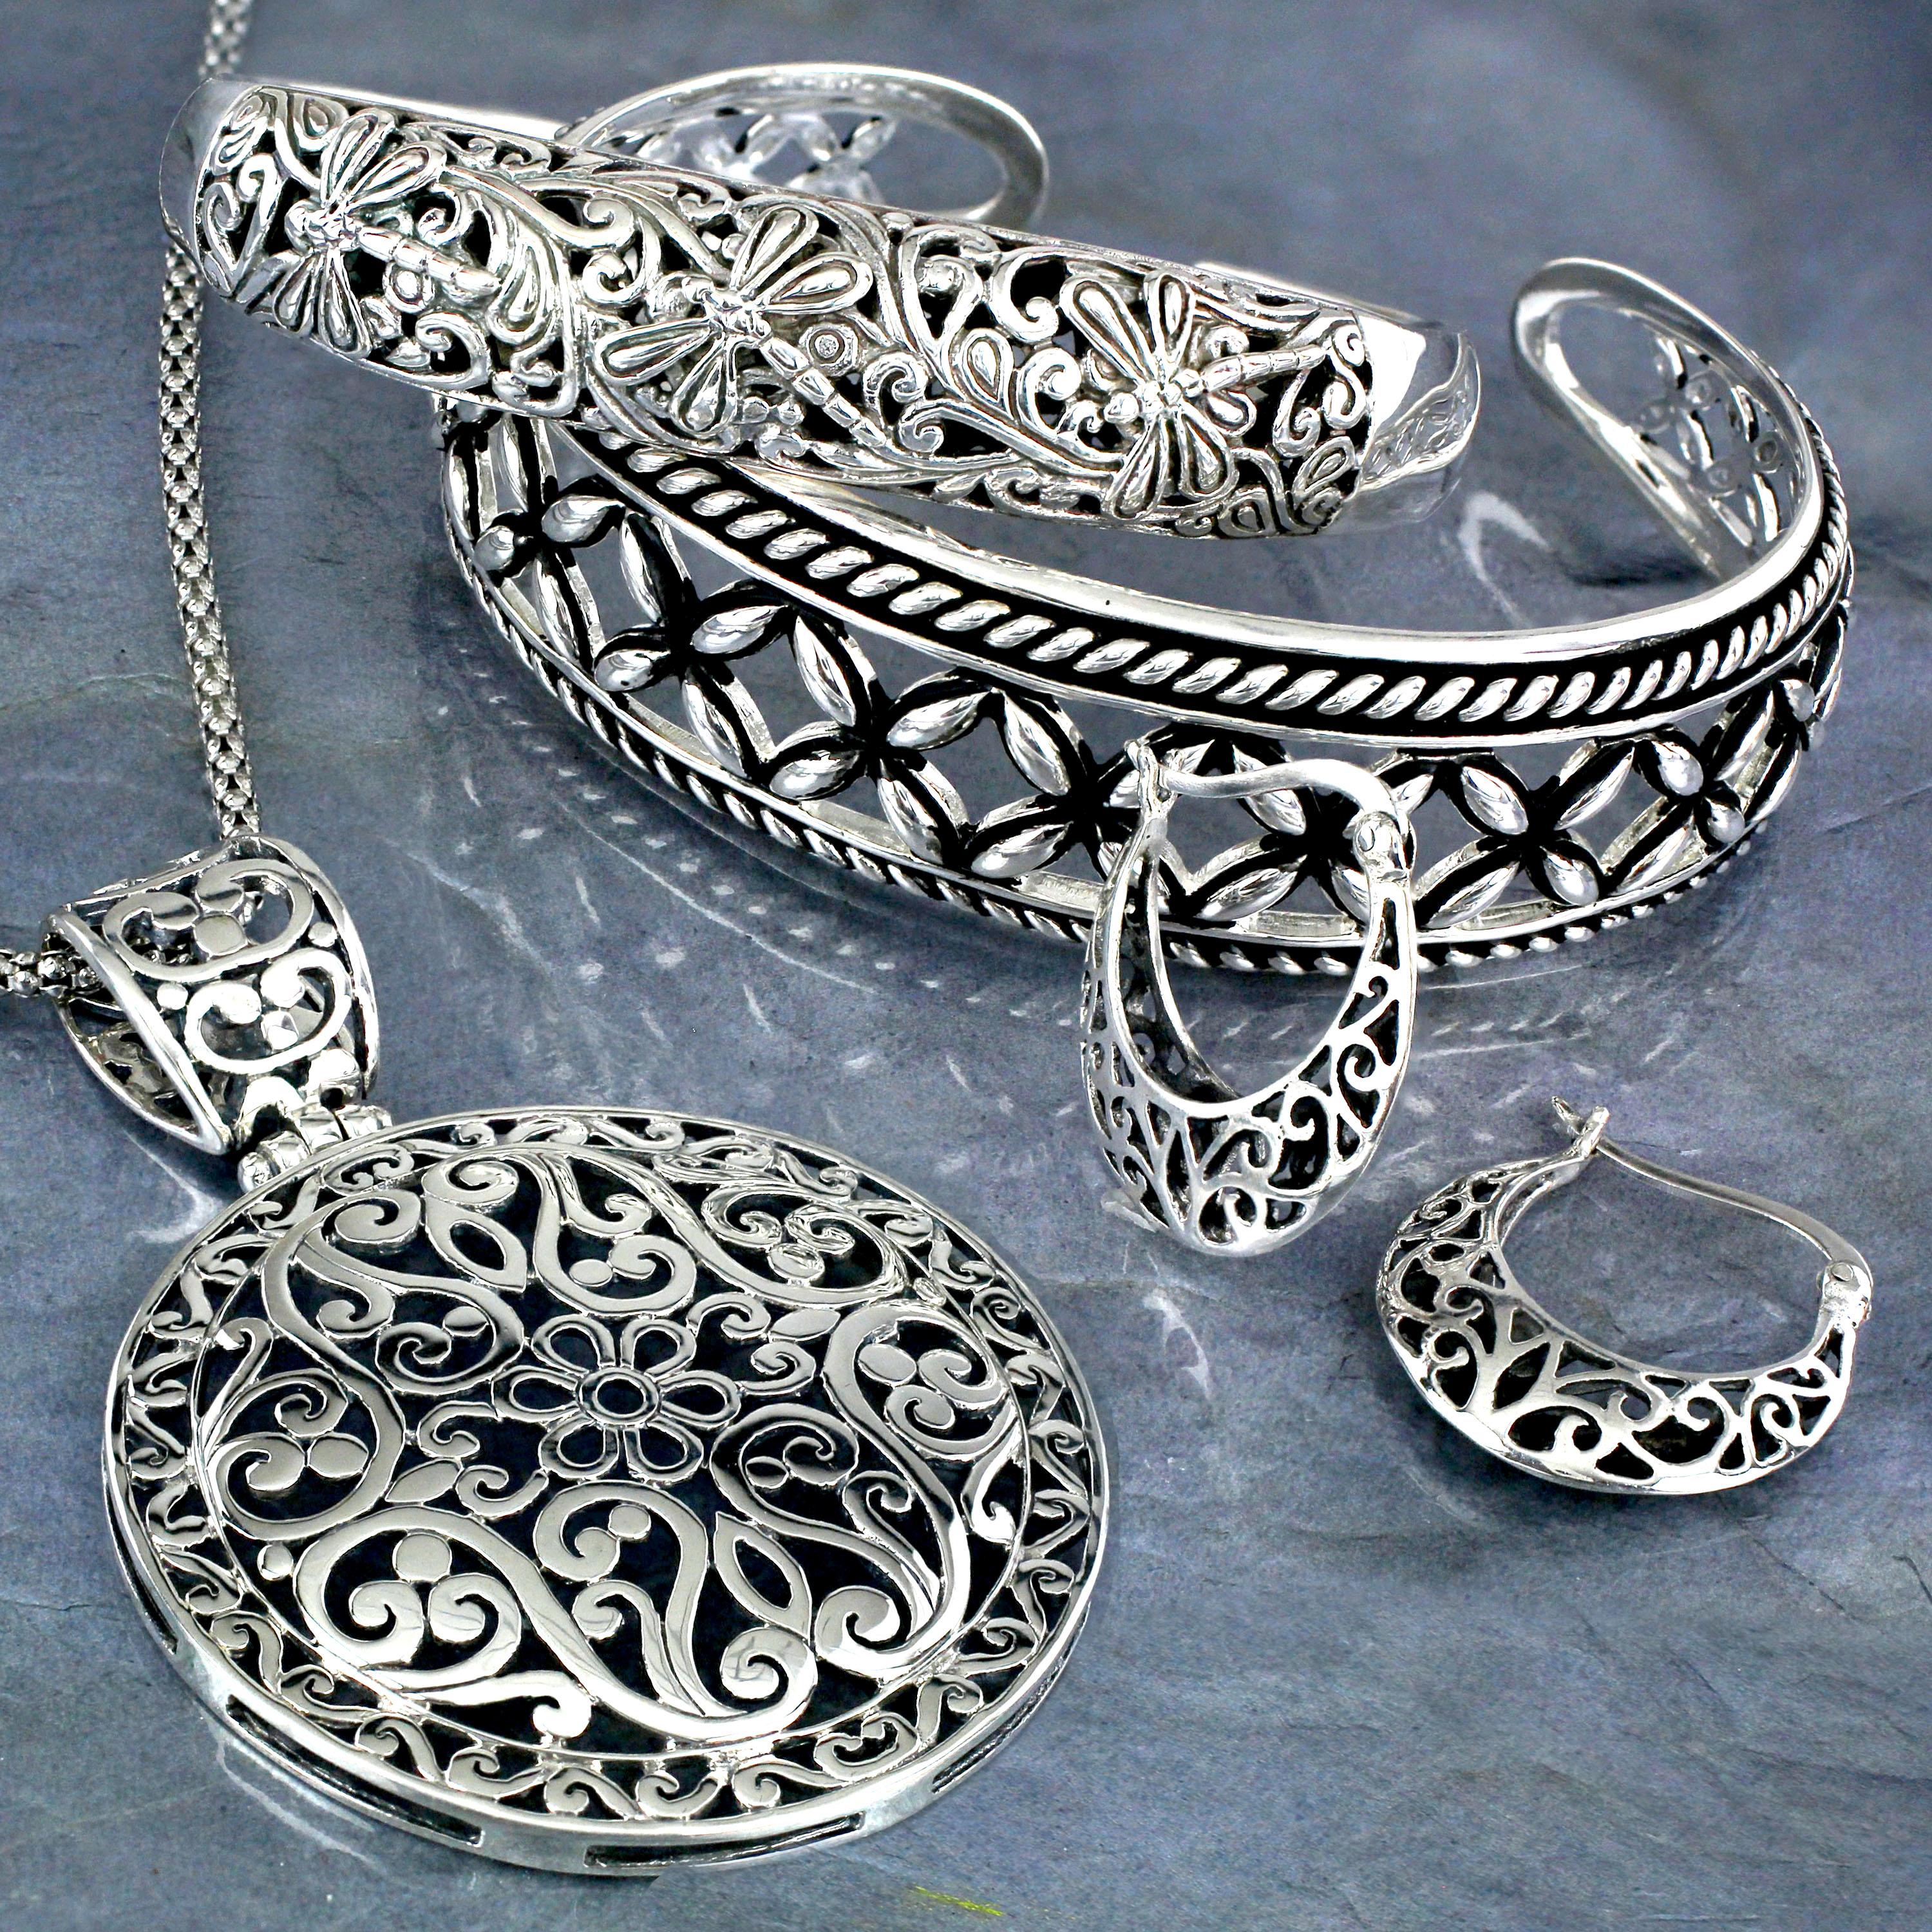 Silver jewelry photo